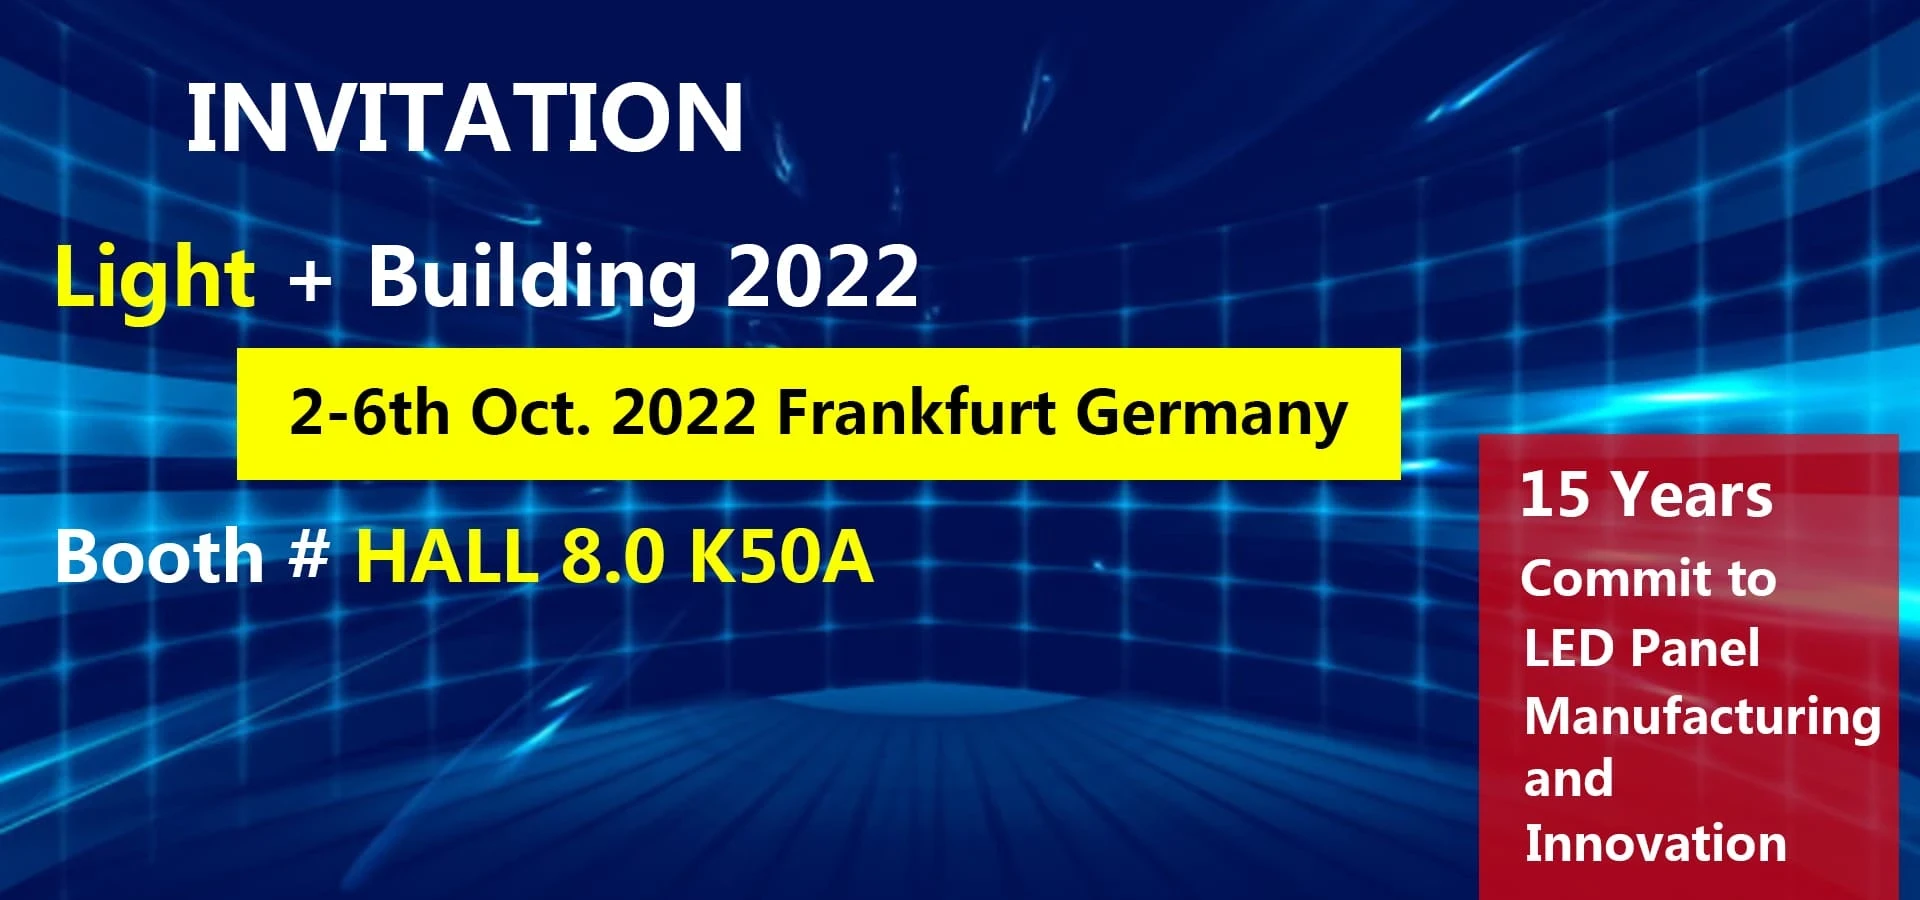 Sunsylux Is Attending Messe Frankfurt, Light + Building 2022